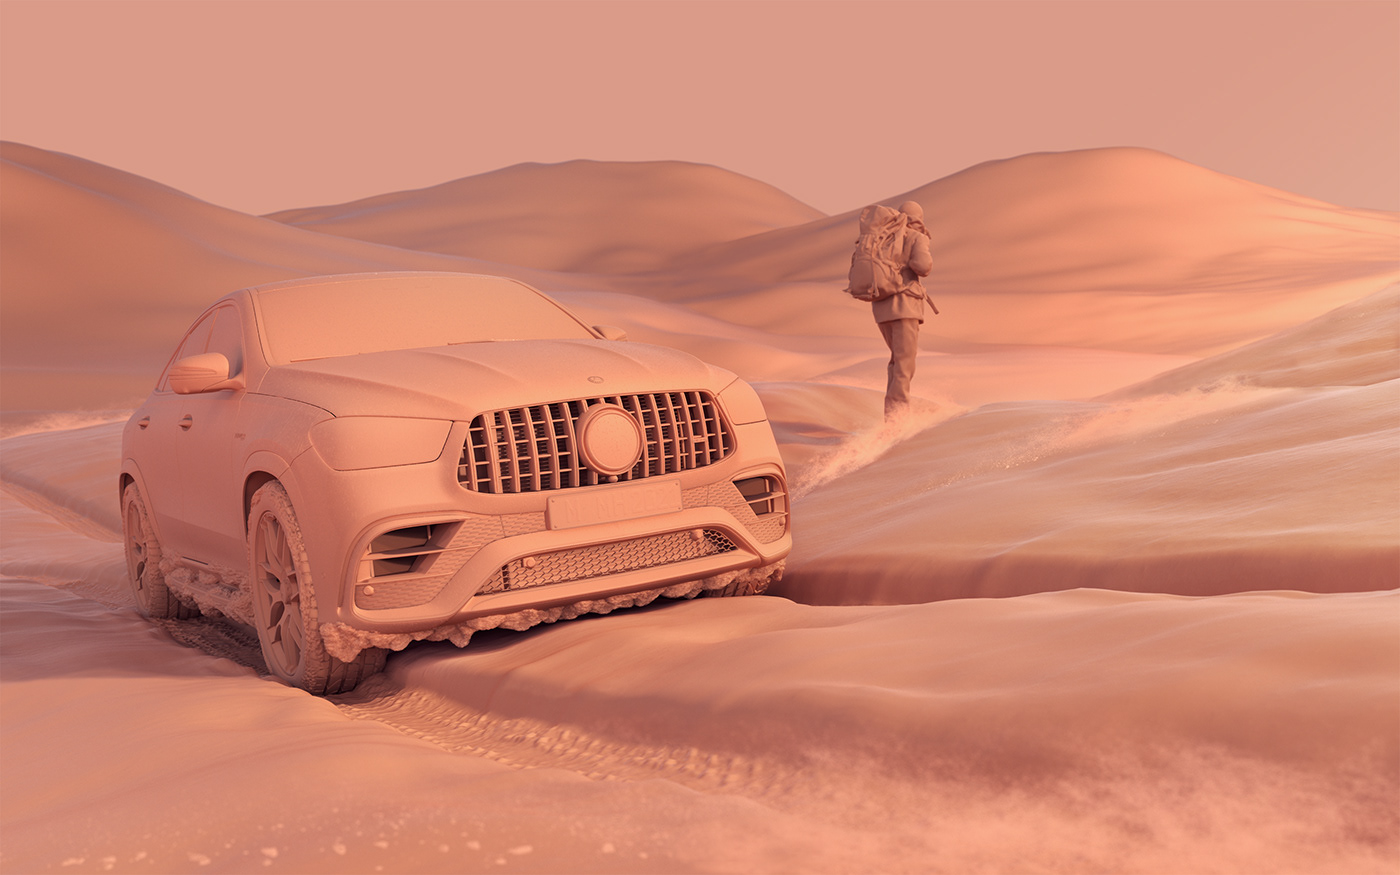 AMG car CGI mercedes suv automotive   Offroad snow Nature winter